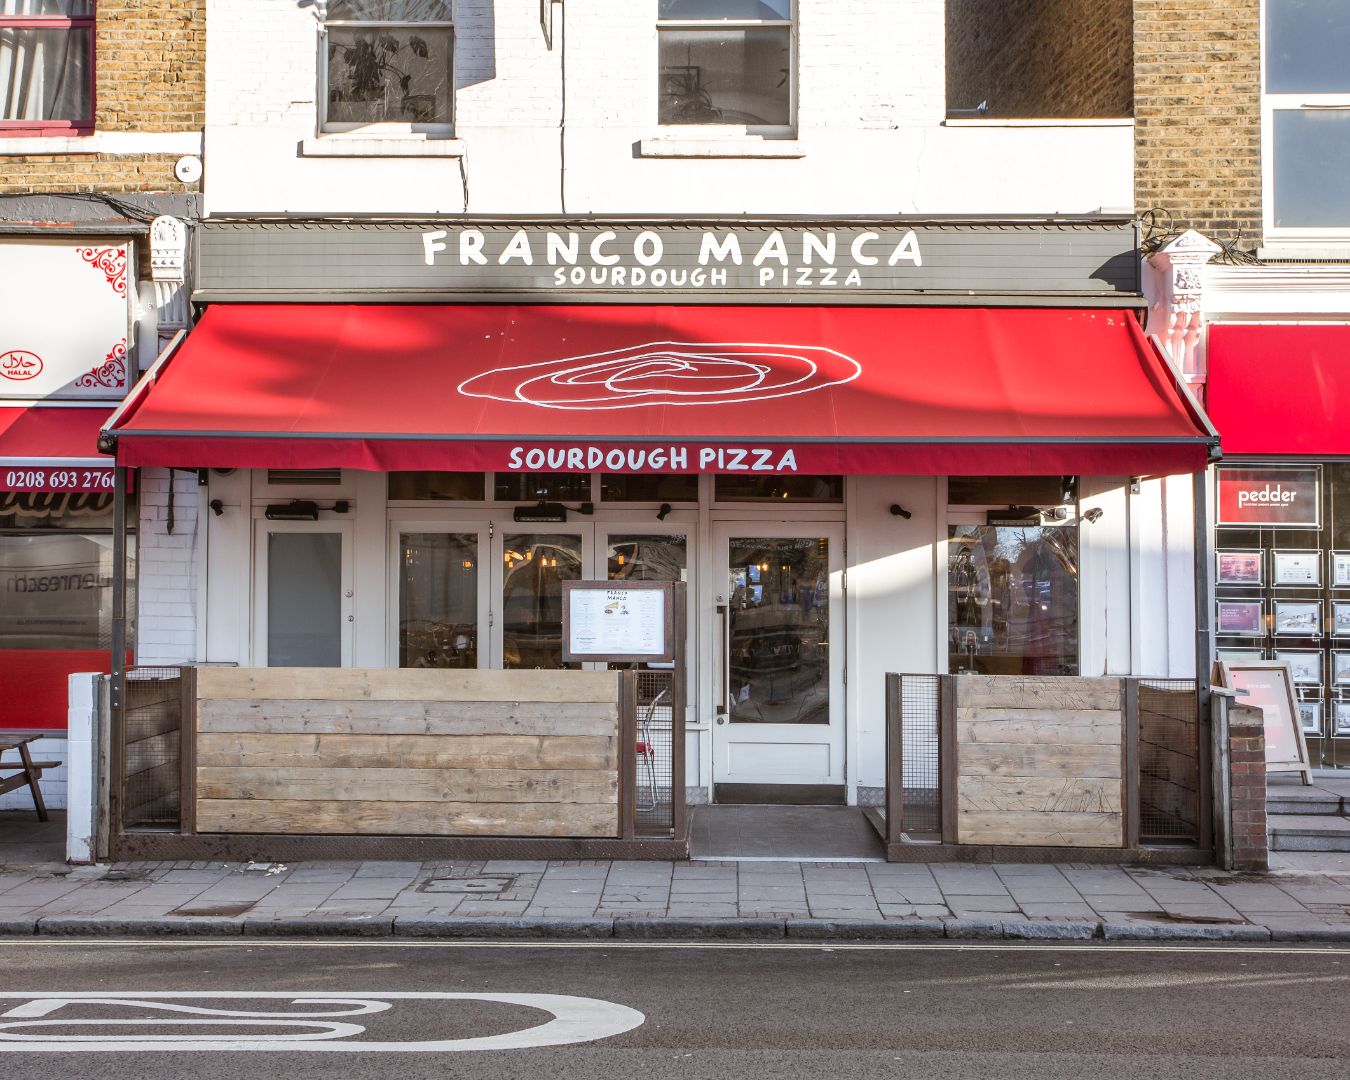 Franco Manca venue in East Dulwich